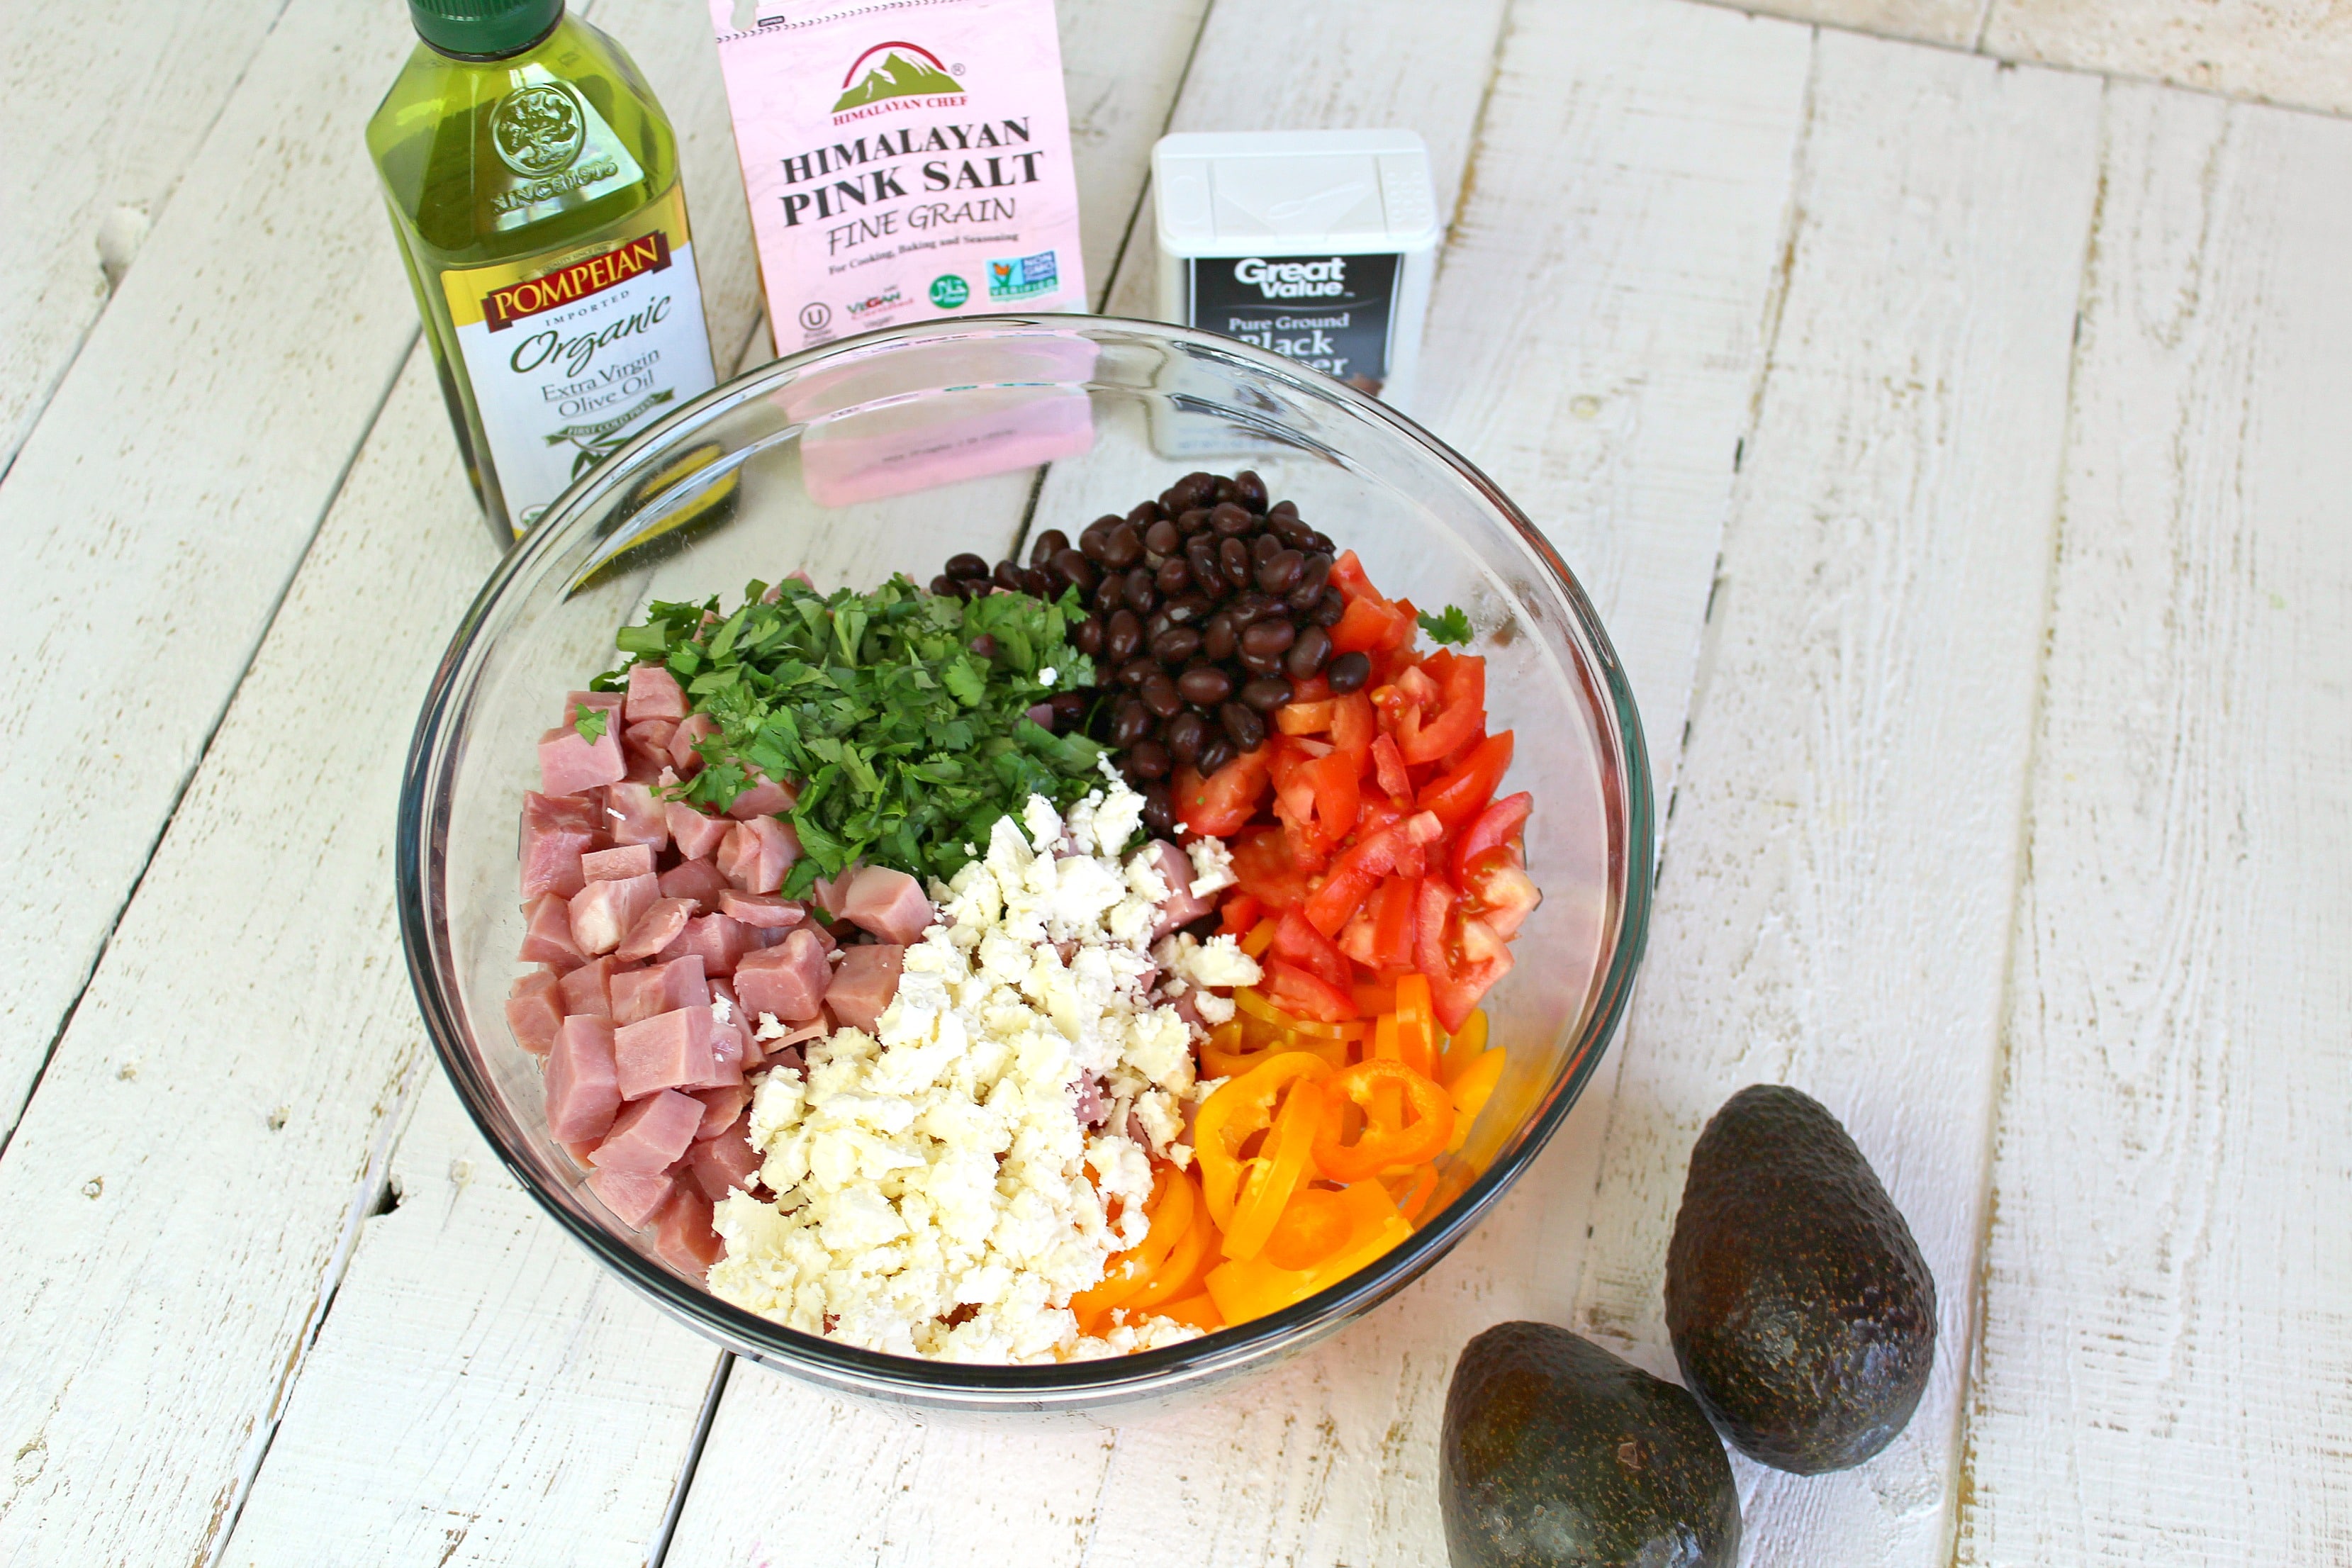 In a large bowl, add chopped veggies, black beans, crumbled feta, diced ham, extra virgin olive oil, salt, and pepper.